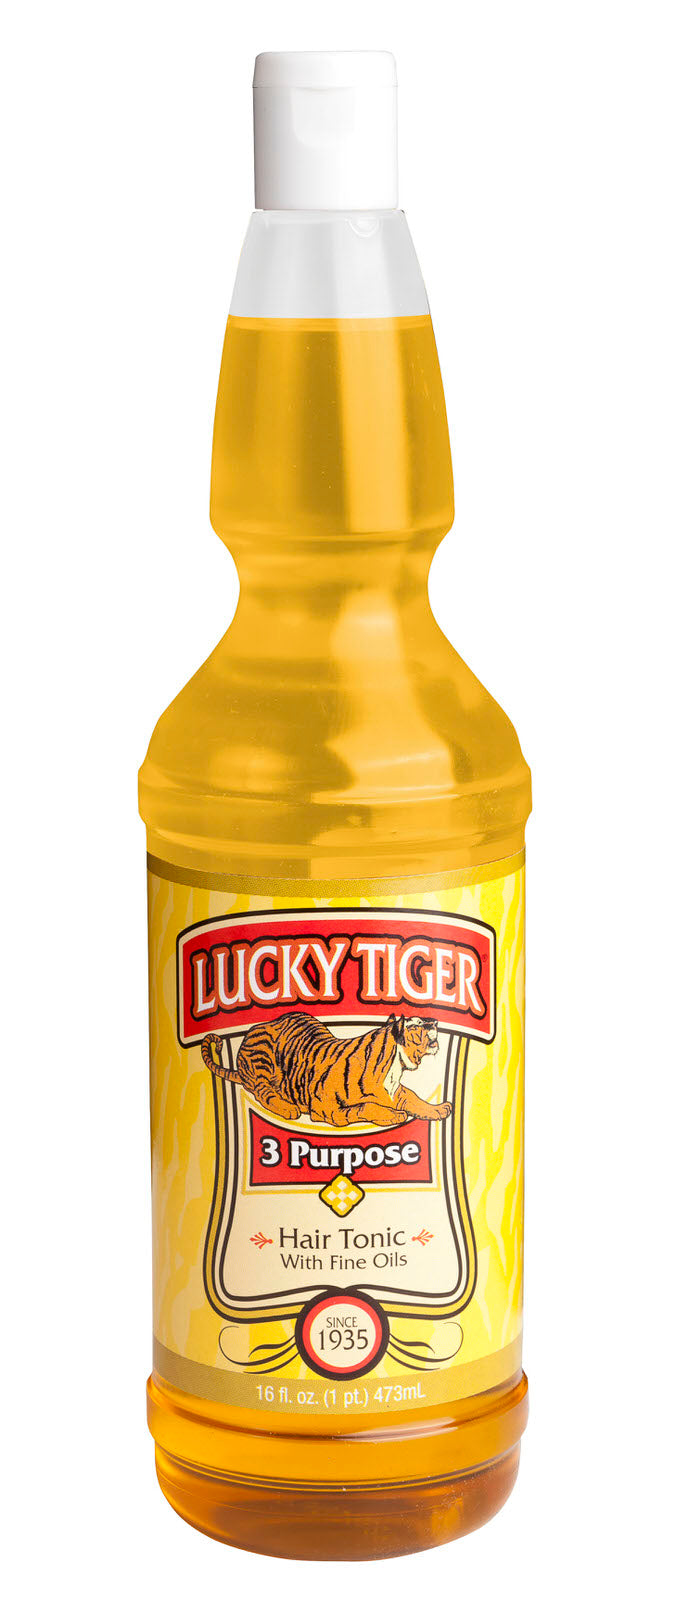 LUCKY TIGER 3 PURPOSE HAIR TONIC - Ozbarber